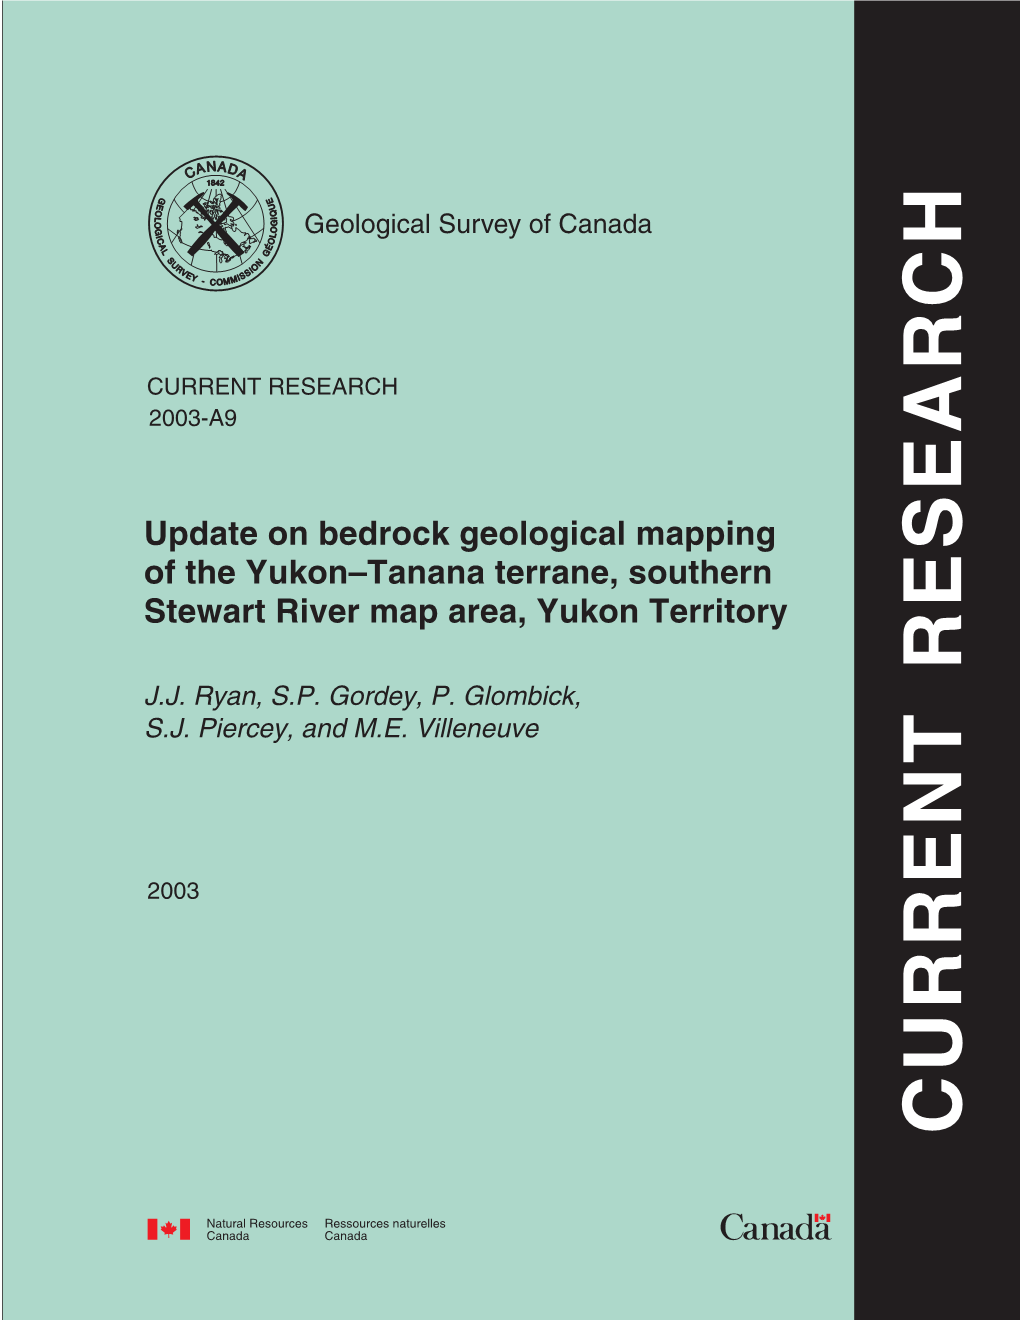 Update on Bedrock Geological Mapping of the Yukon–Tanana Terrane, Southern Stewart River Map Area, Yukon Territory